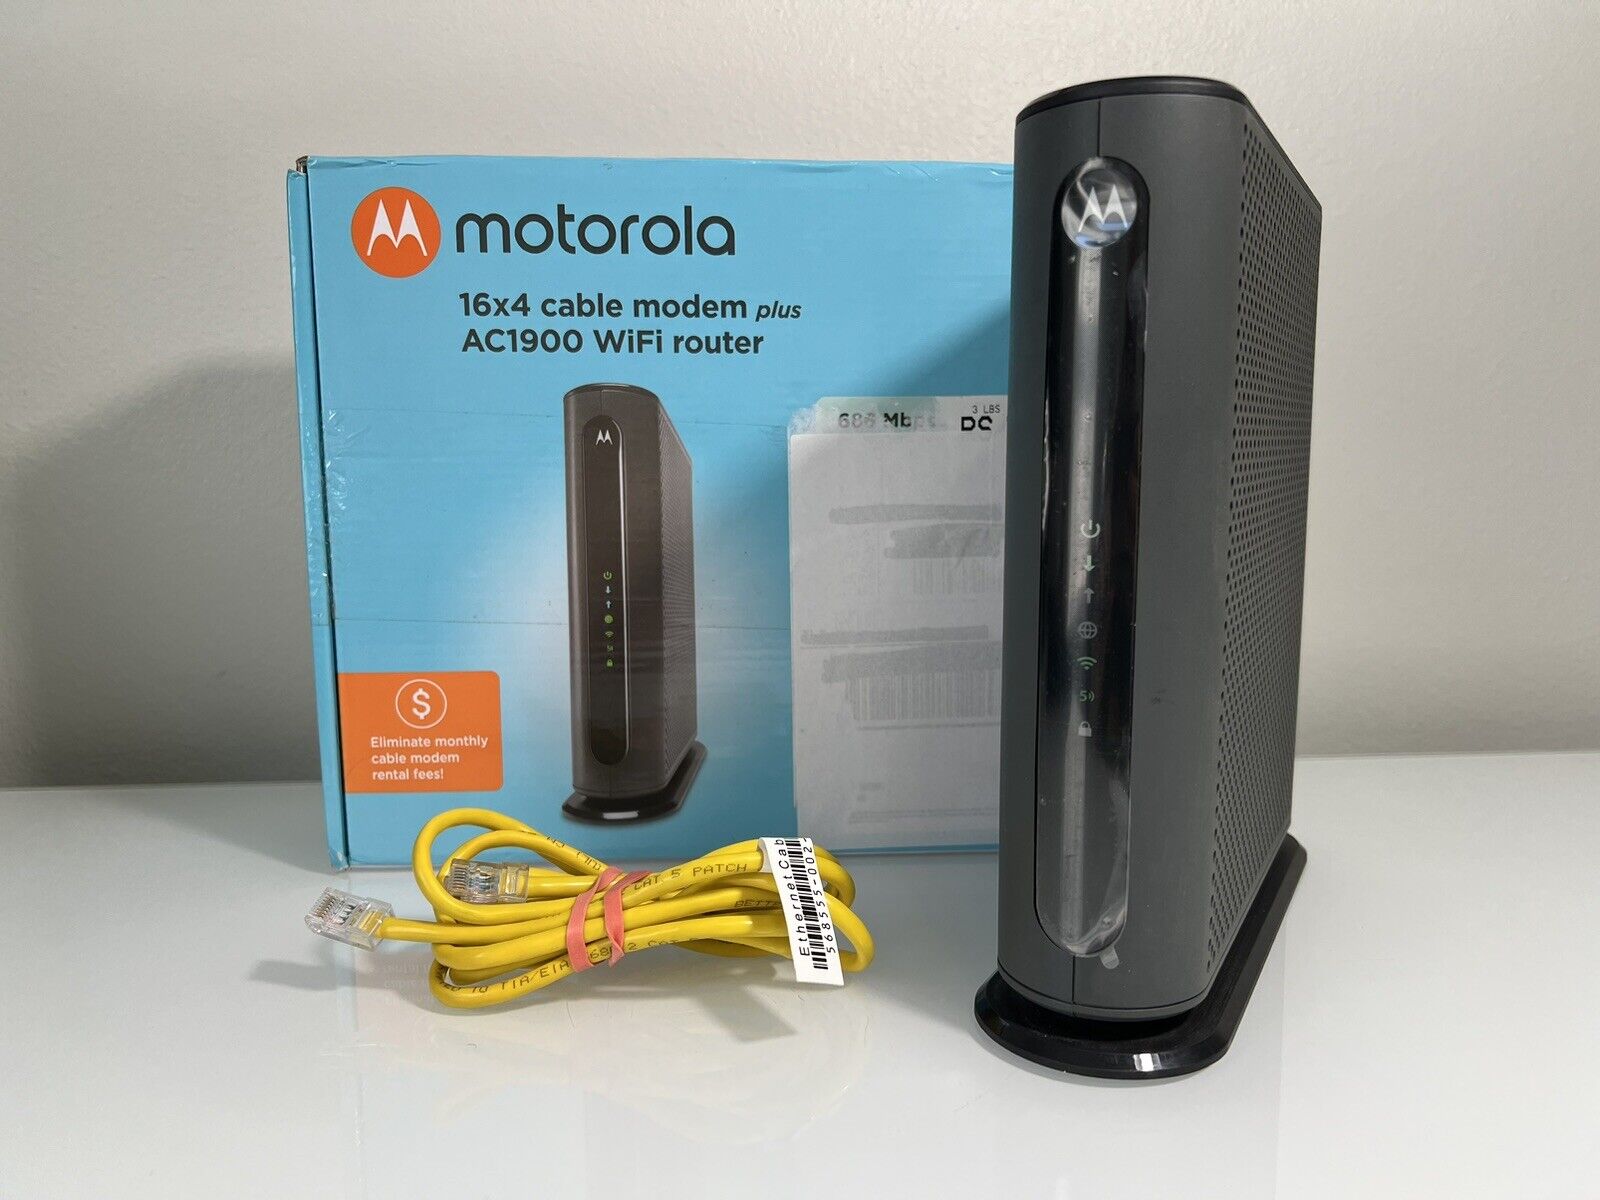 Motorola MG7550  16x4 DOCSIS 3.0 Cable Modem Plus AC1900 WiFi Router 686 Mbps